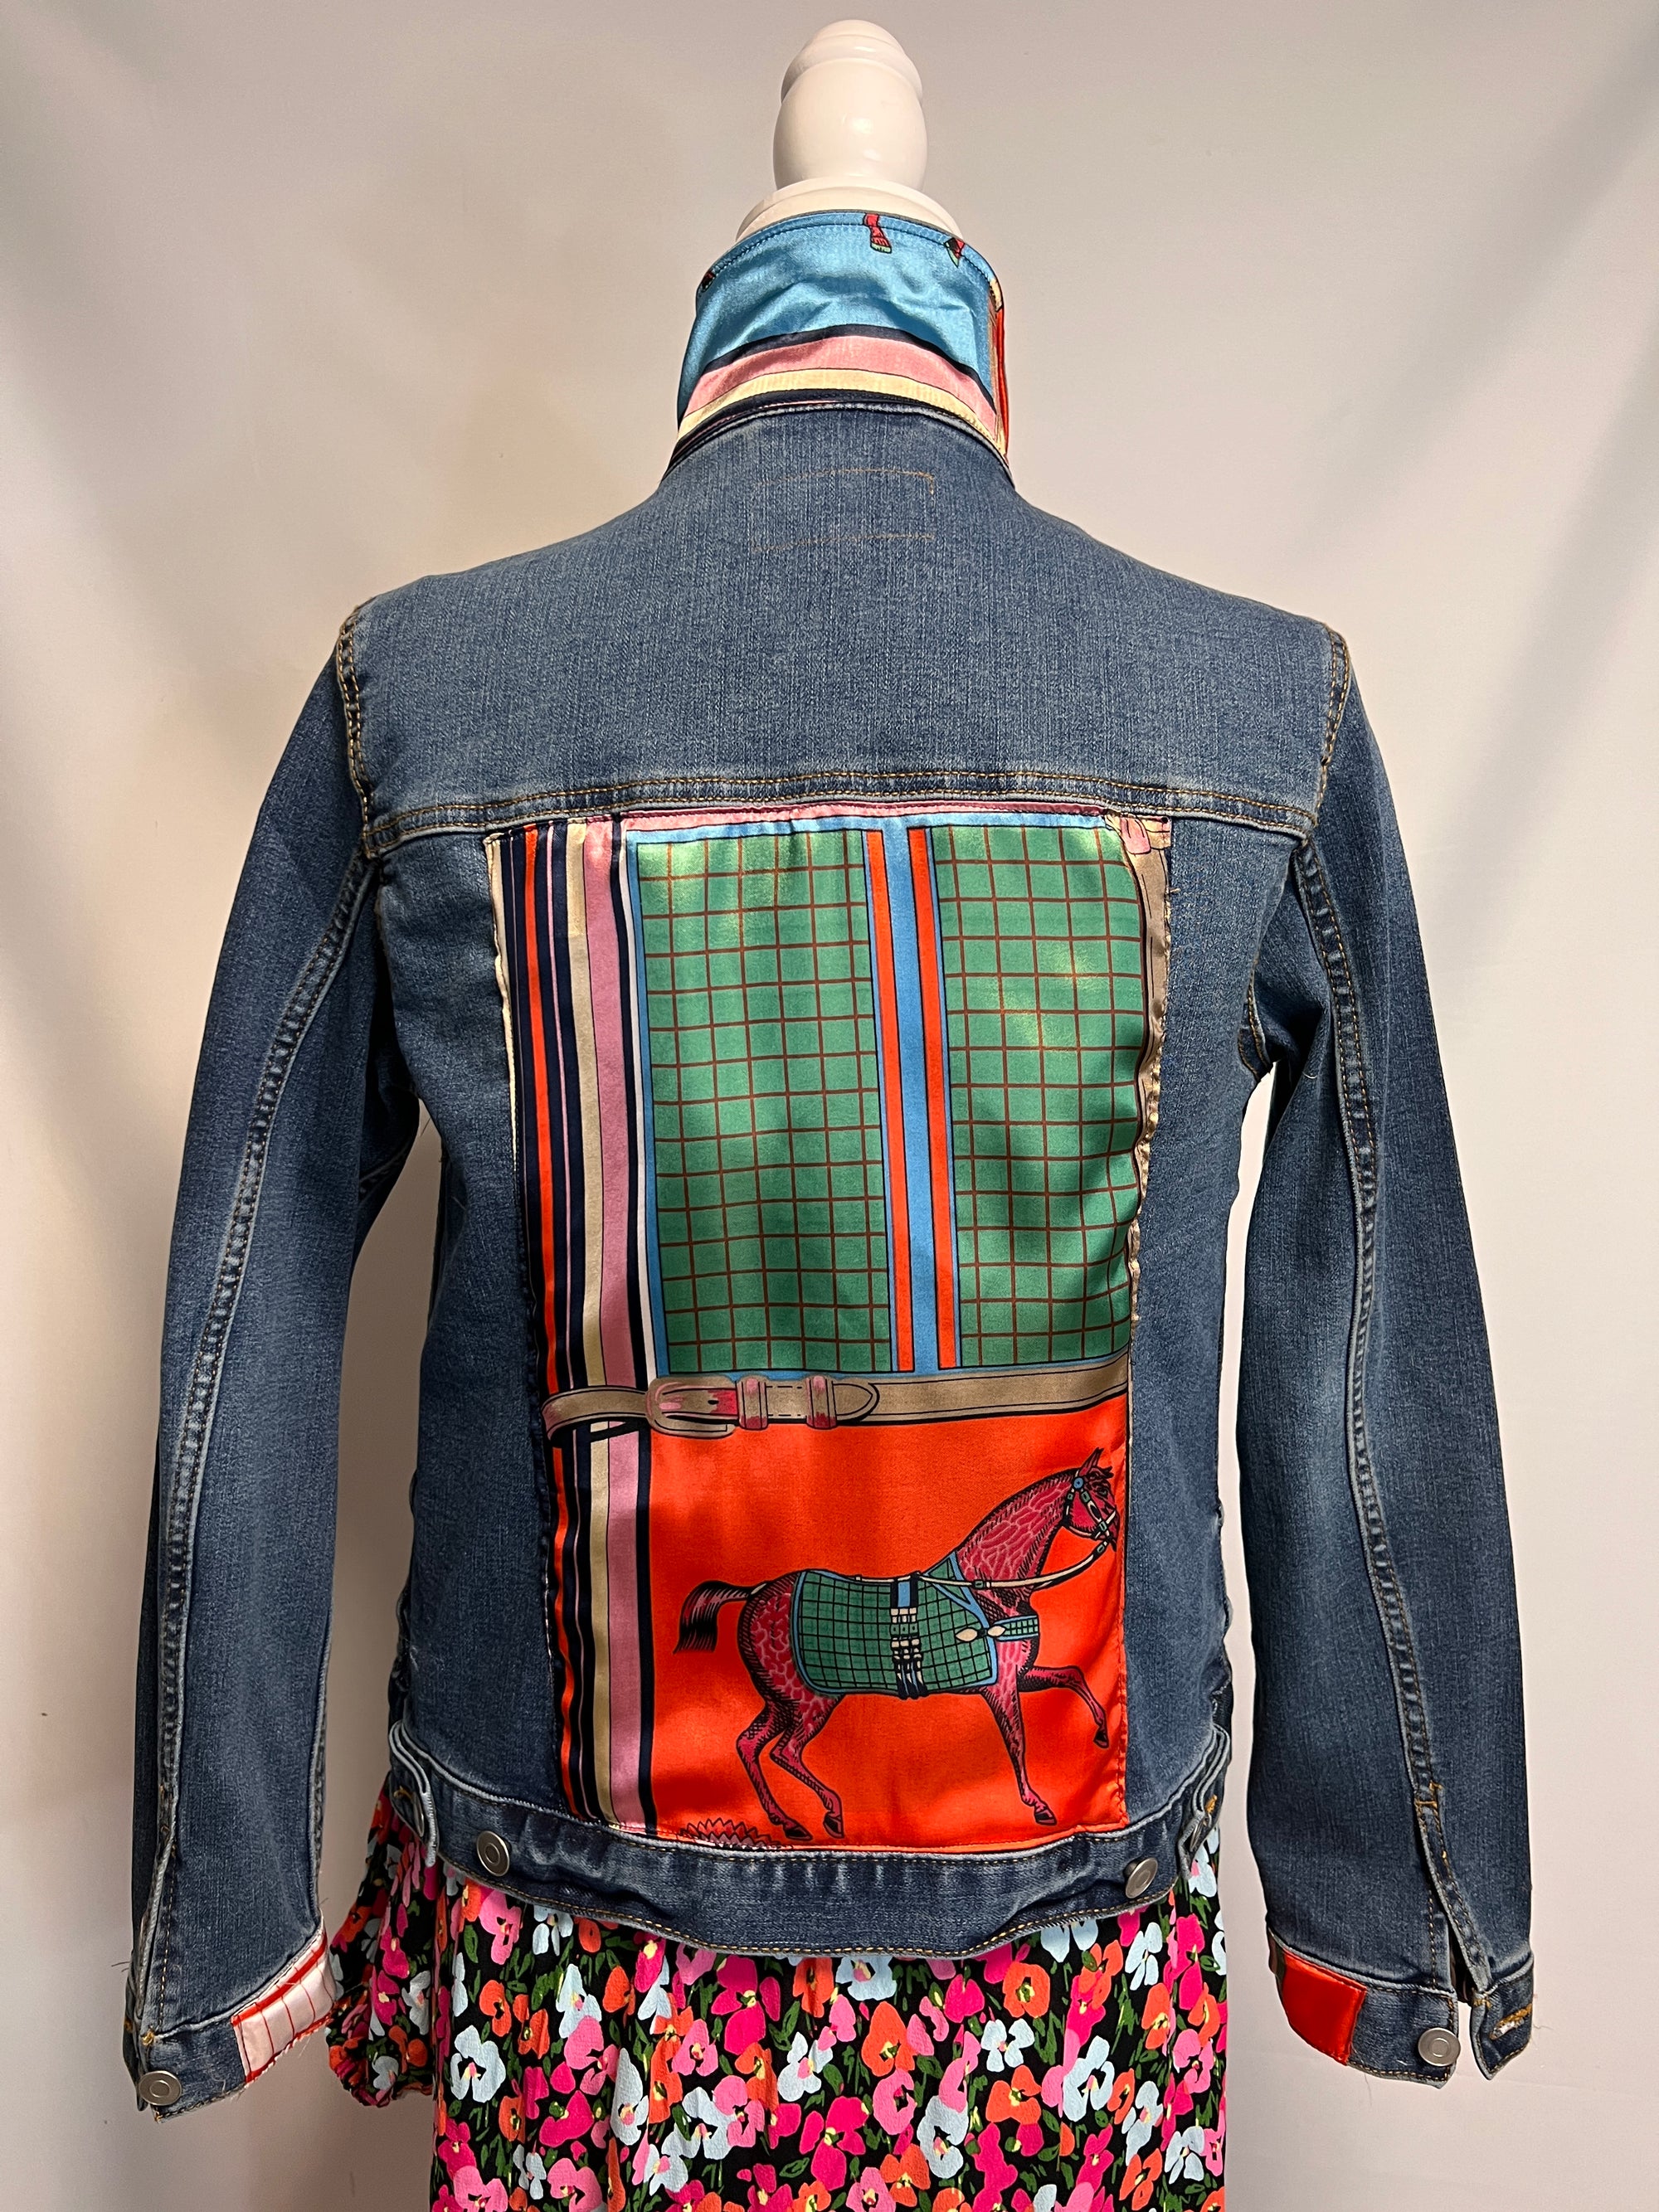 Colorful Jockey Silks Scarf on Denim Jacket